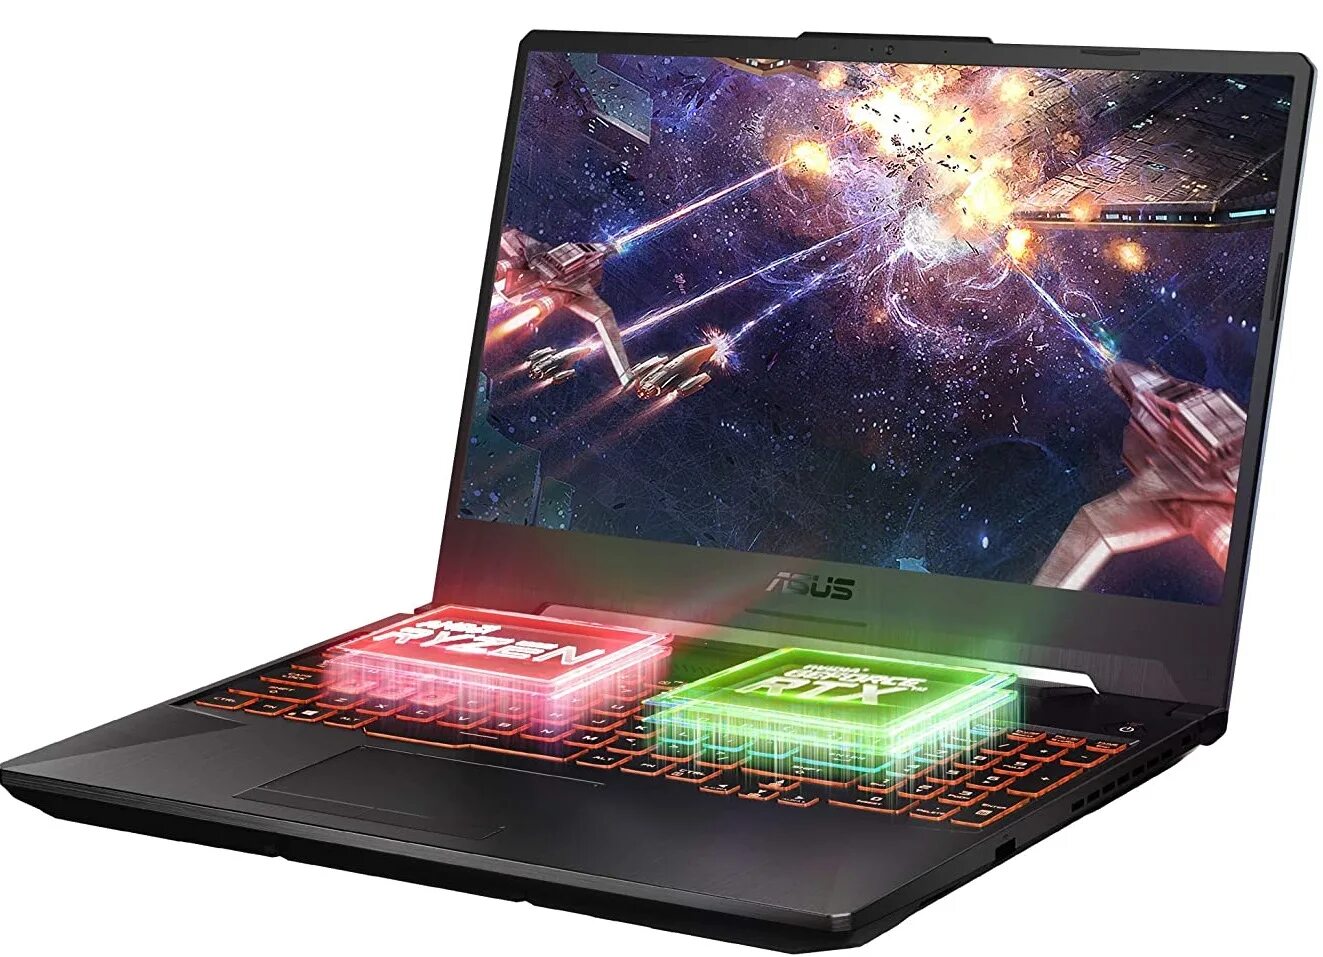 ASUS Laptop Ryzen 7. RTX 2060 Laptop. Ryzen 7 4800h. Gaming Laptop RTX 2060.